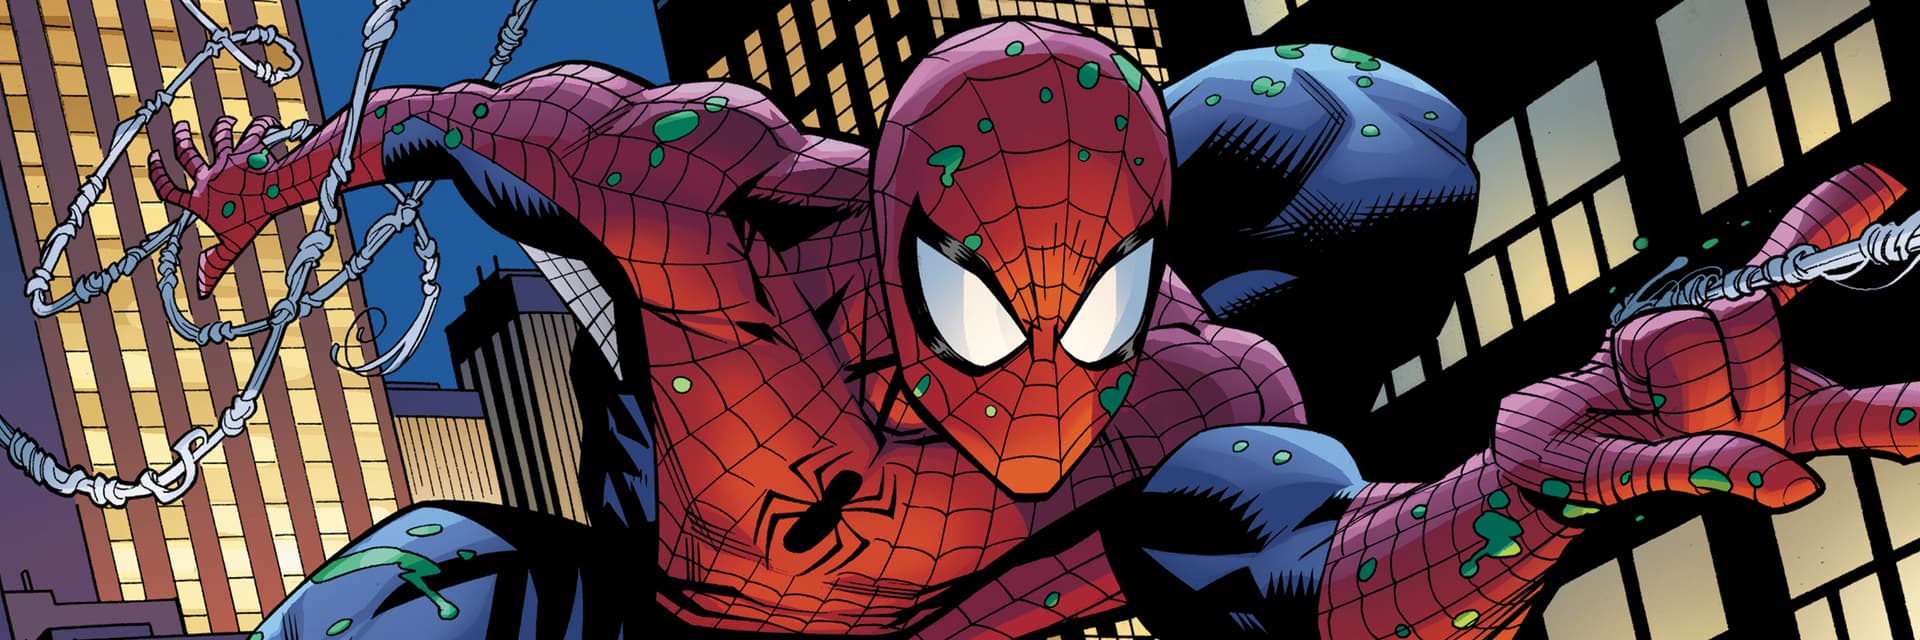 Amazon.com: NECA Marvel Classics Head Knocker Spiderman Toy : Toys & Games